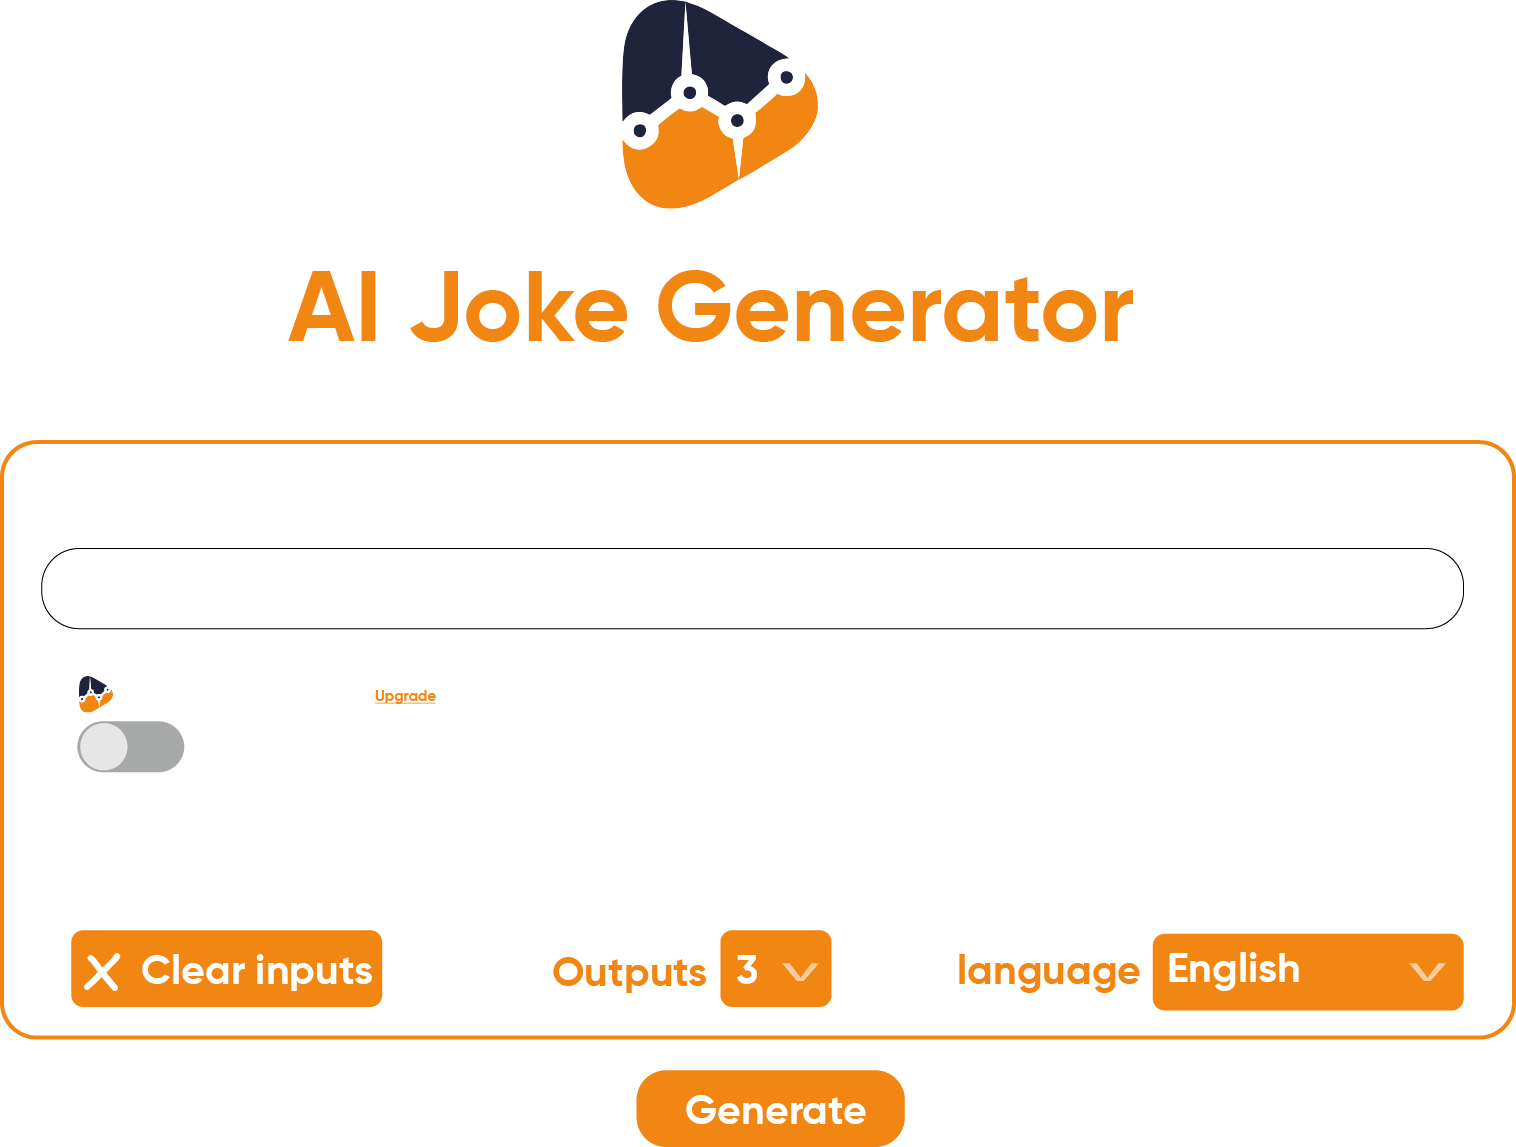 Why use Ettvi's AI Joke Generator?